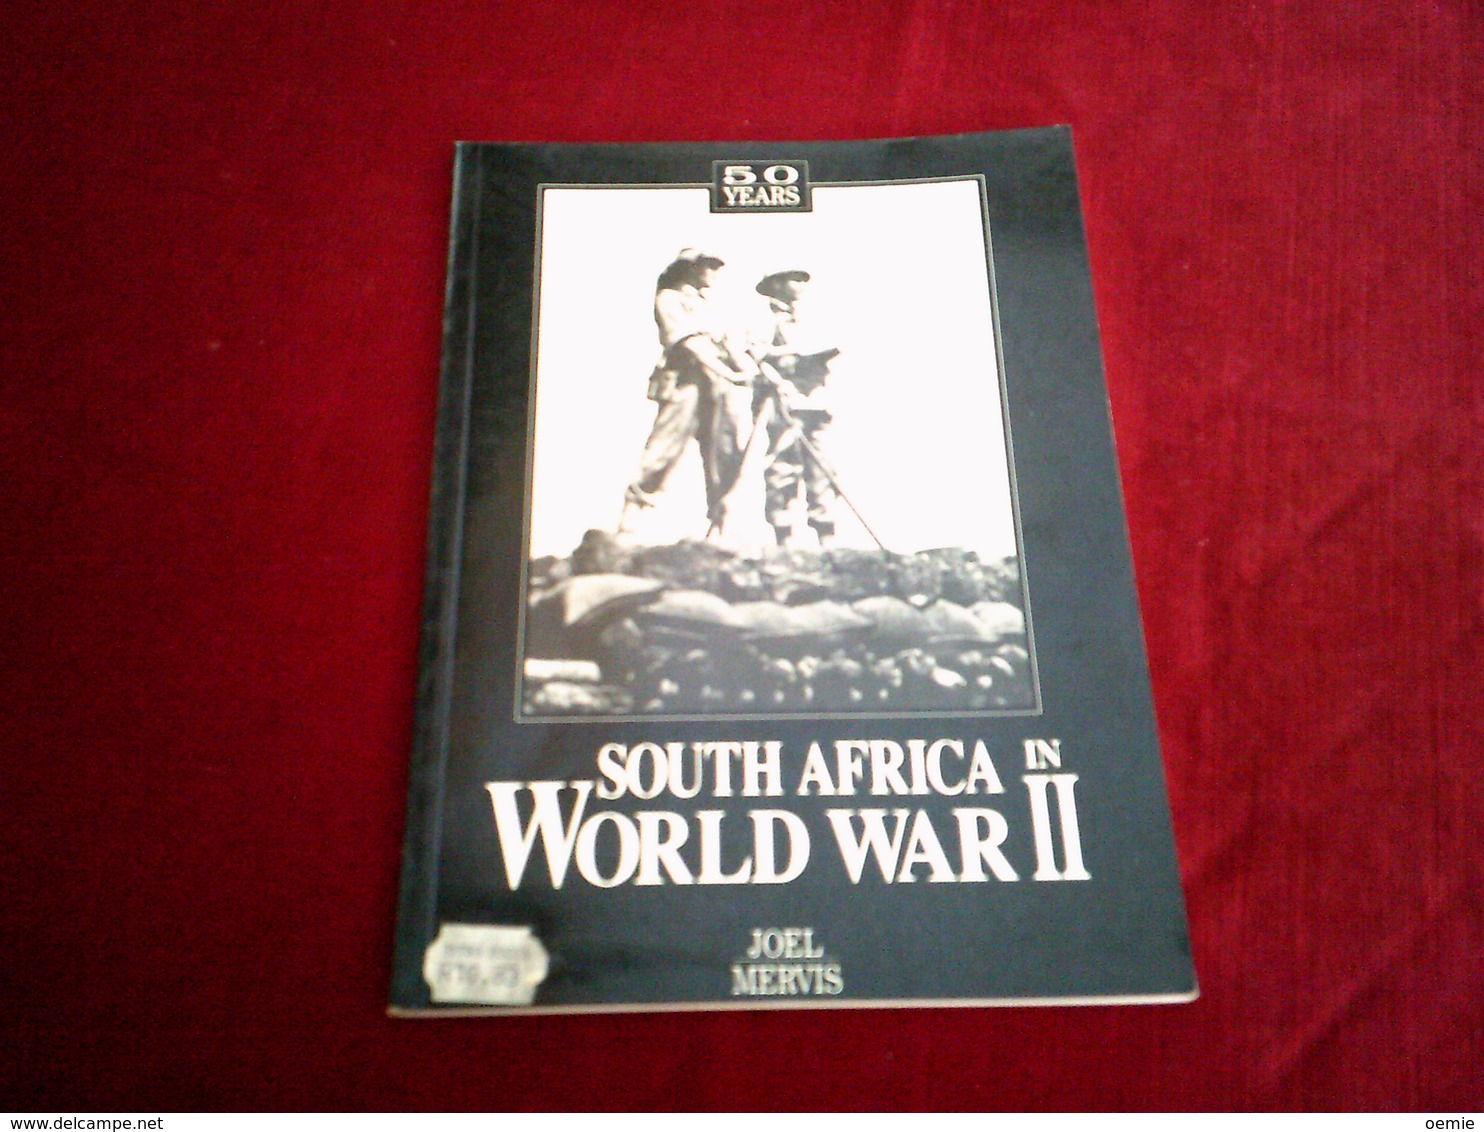 50 YEARS SOUTH AFRICA IN WORLD WAR II  PAR JOEL MERVIS - Forces Armées Américaines